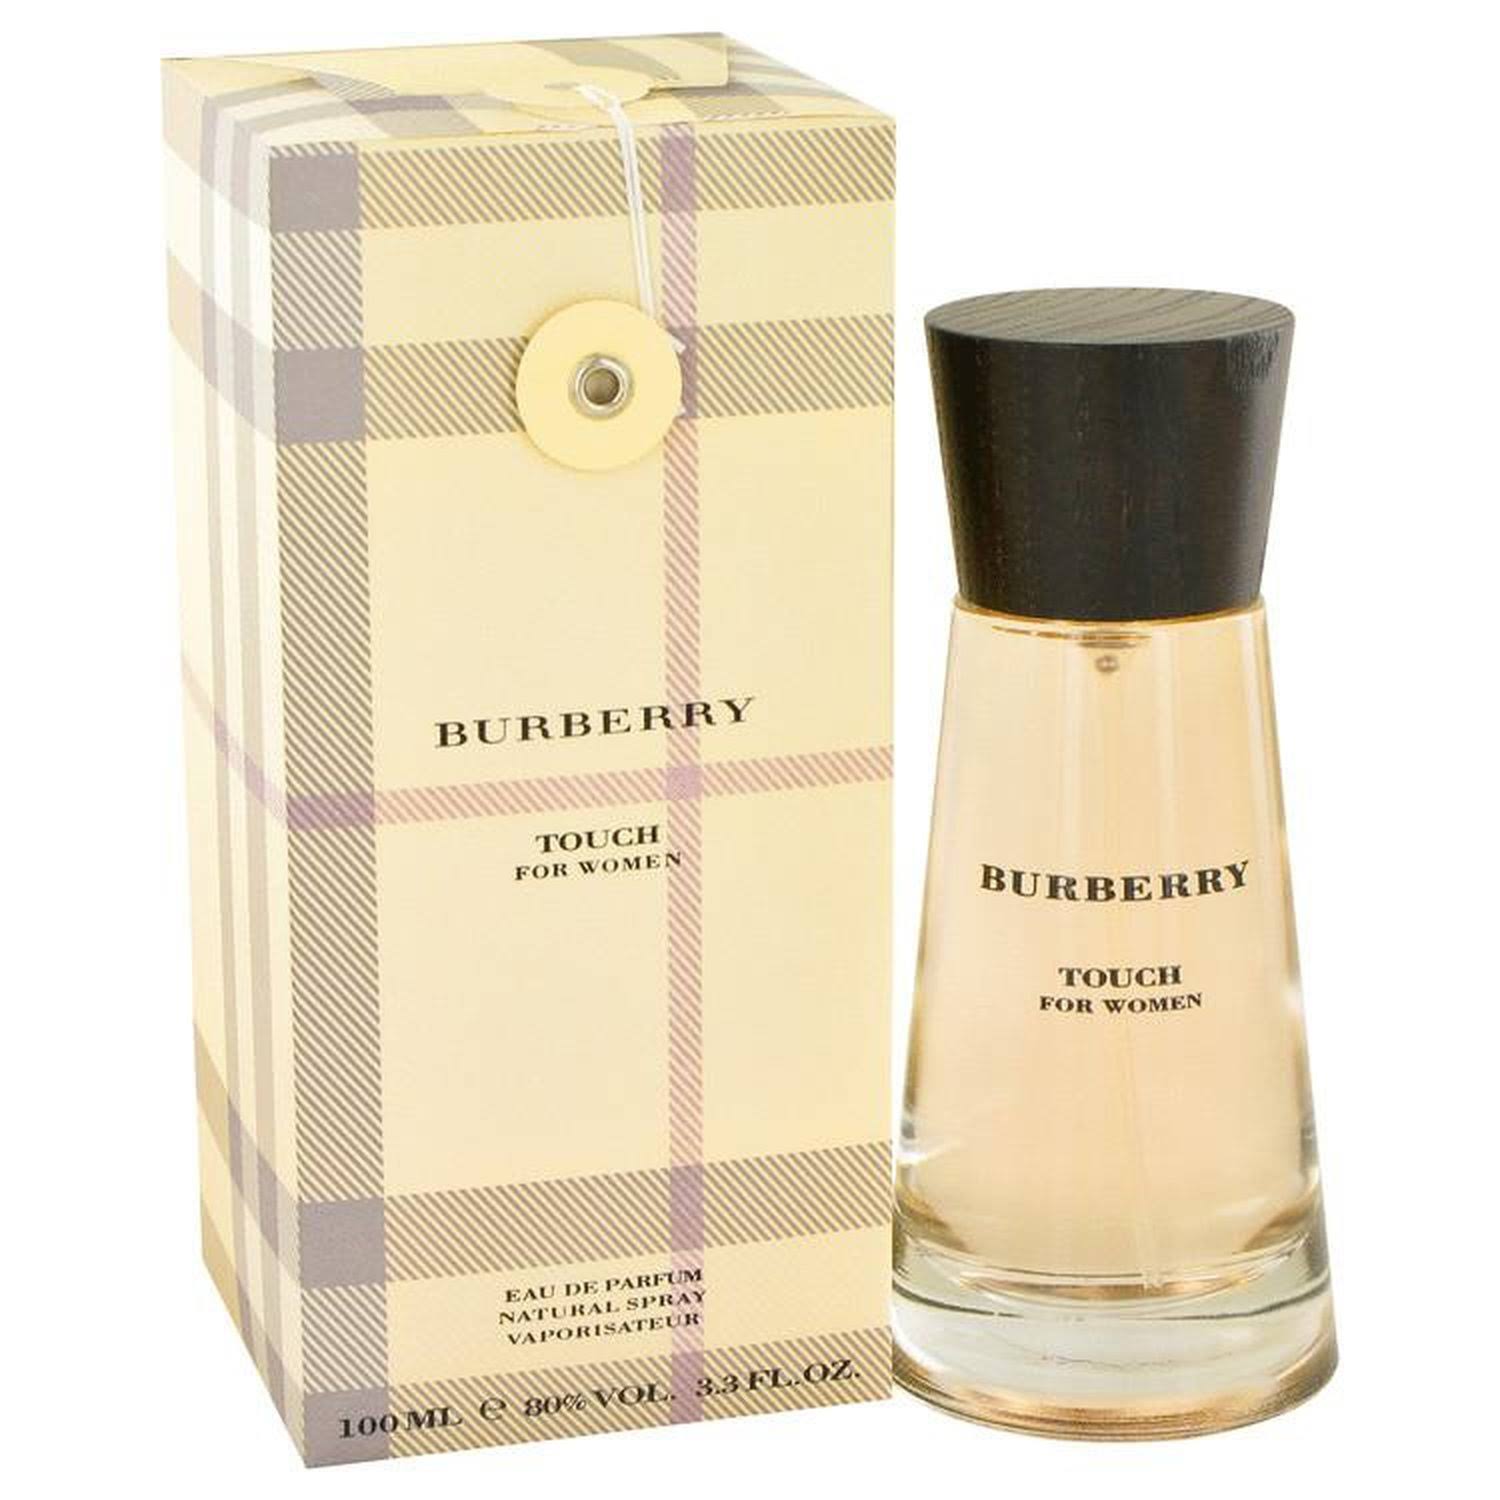 Burberry Touch for Women Eau de Parfum Spray - 100ml